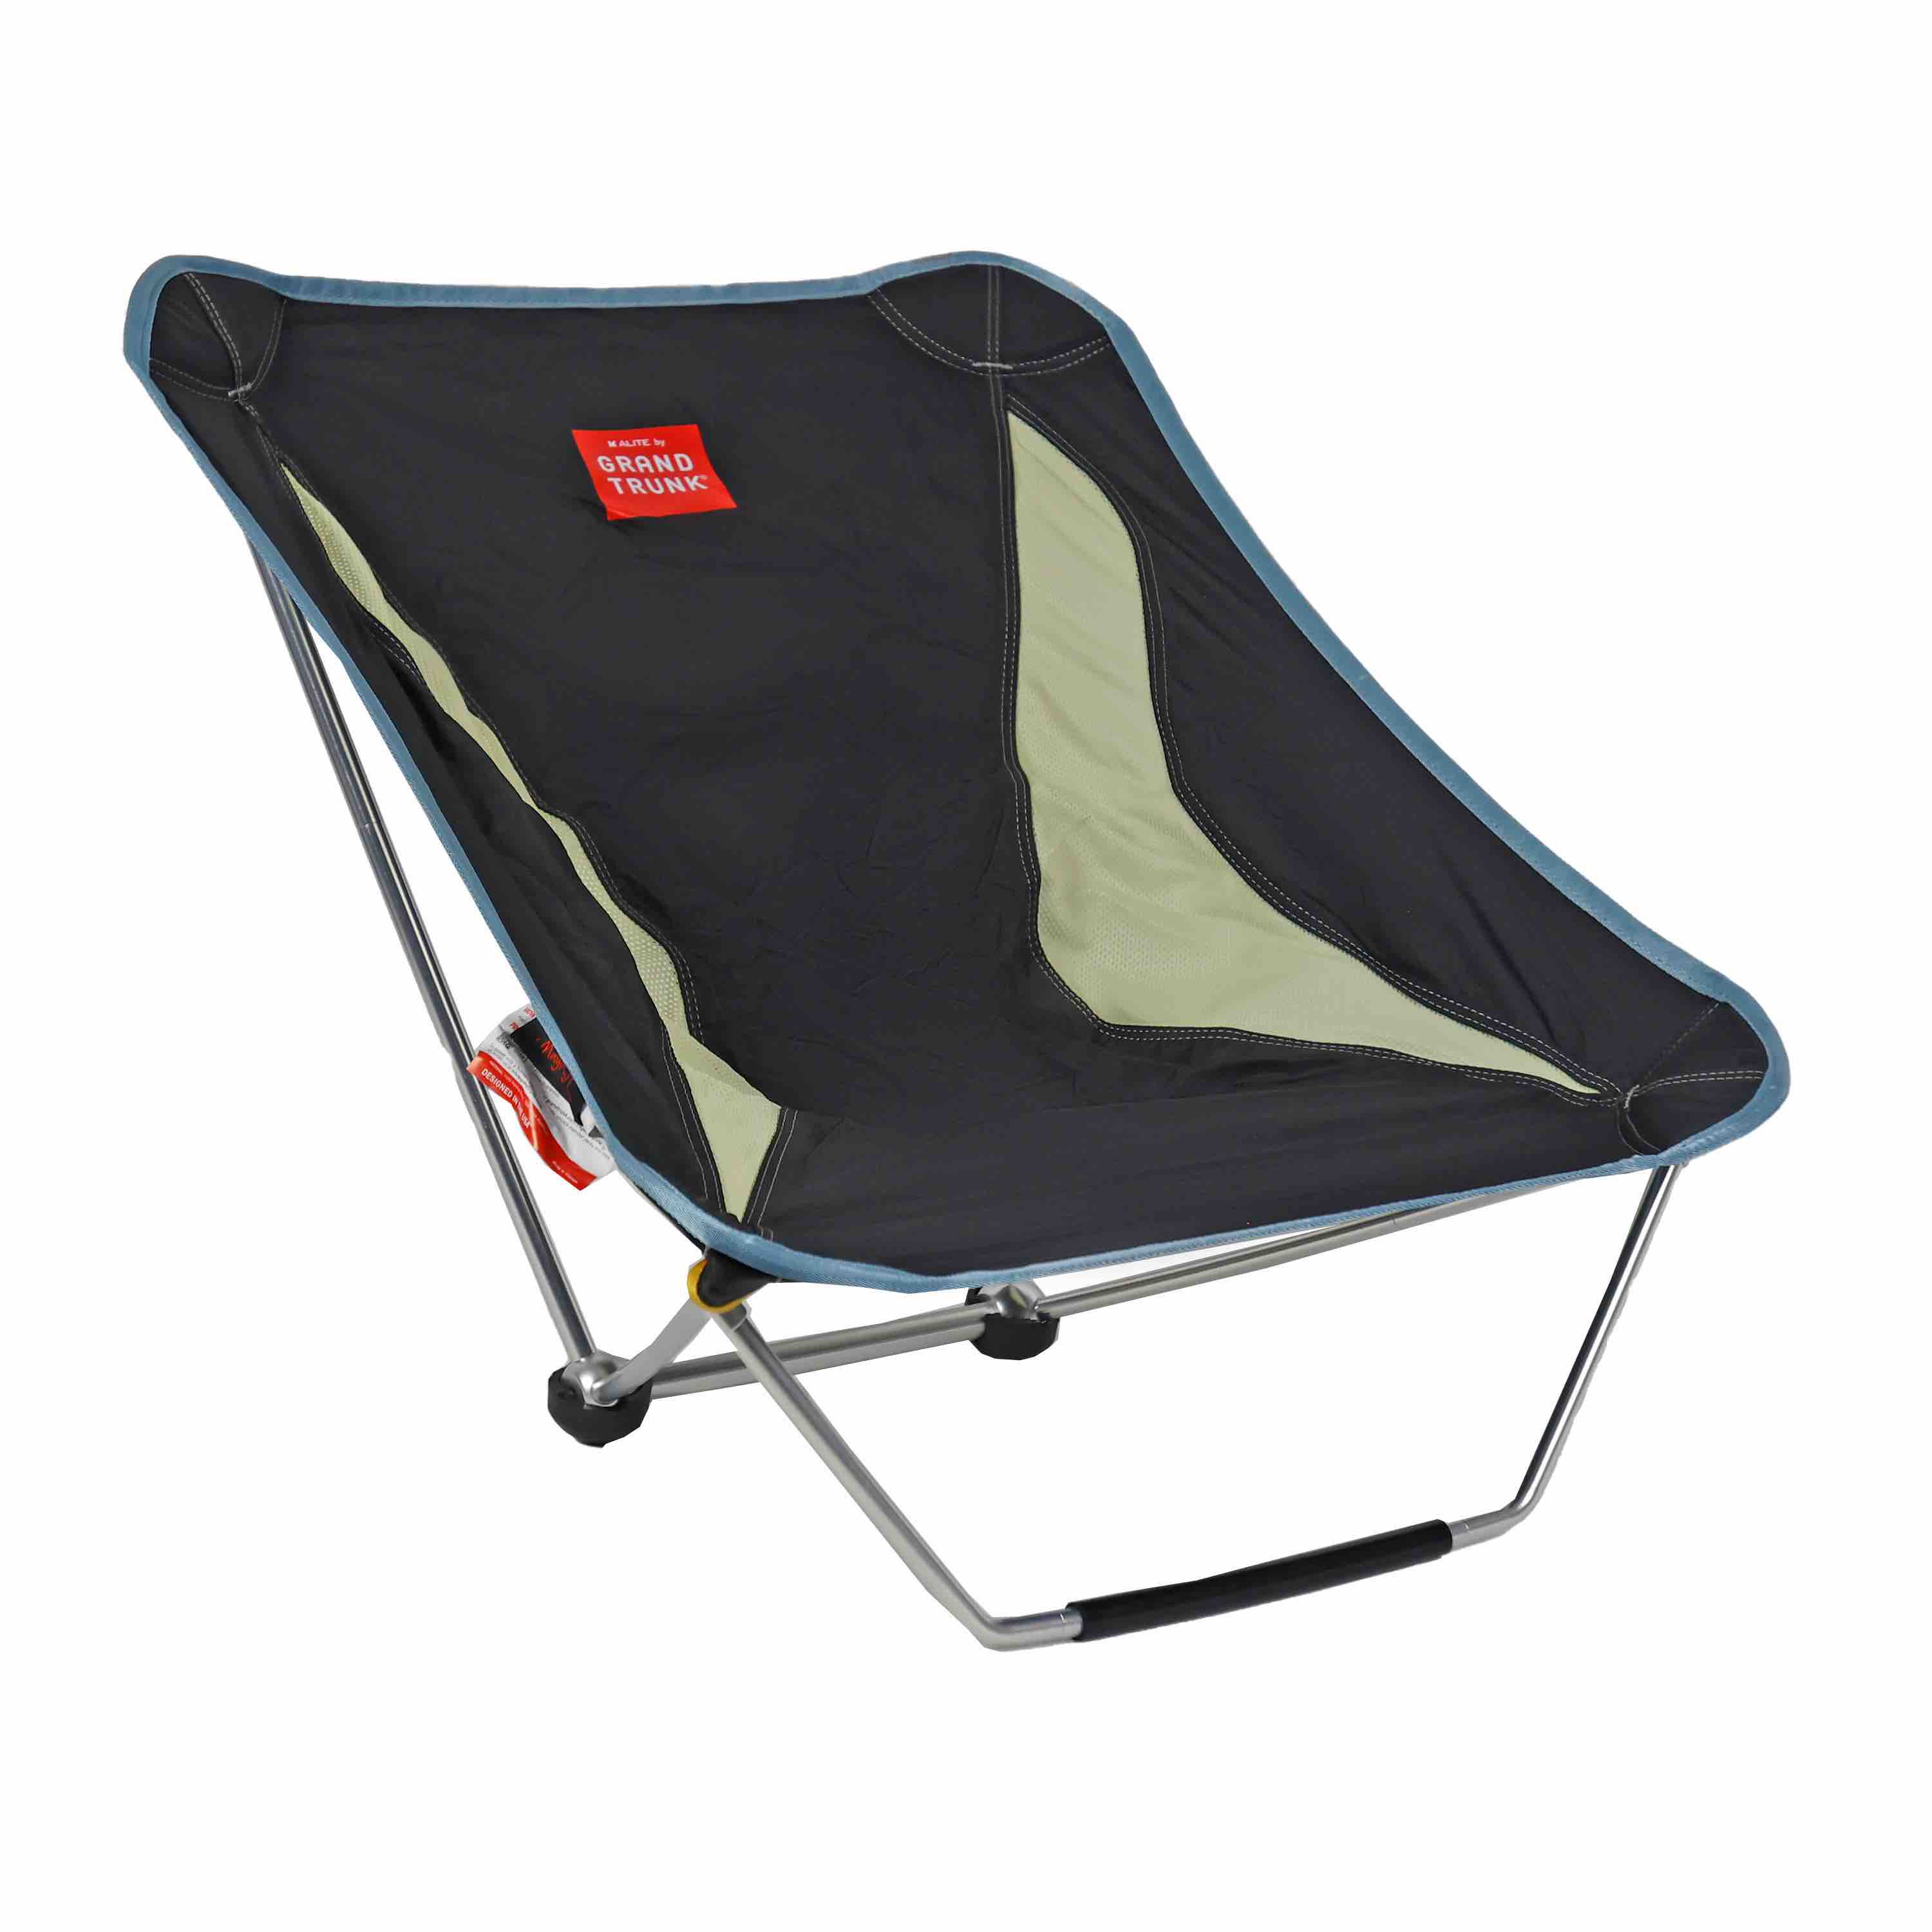 Grand Trunk/Alite Mayfly Chair (black)